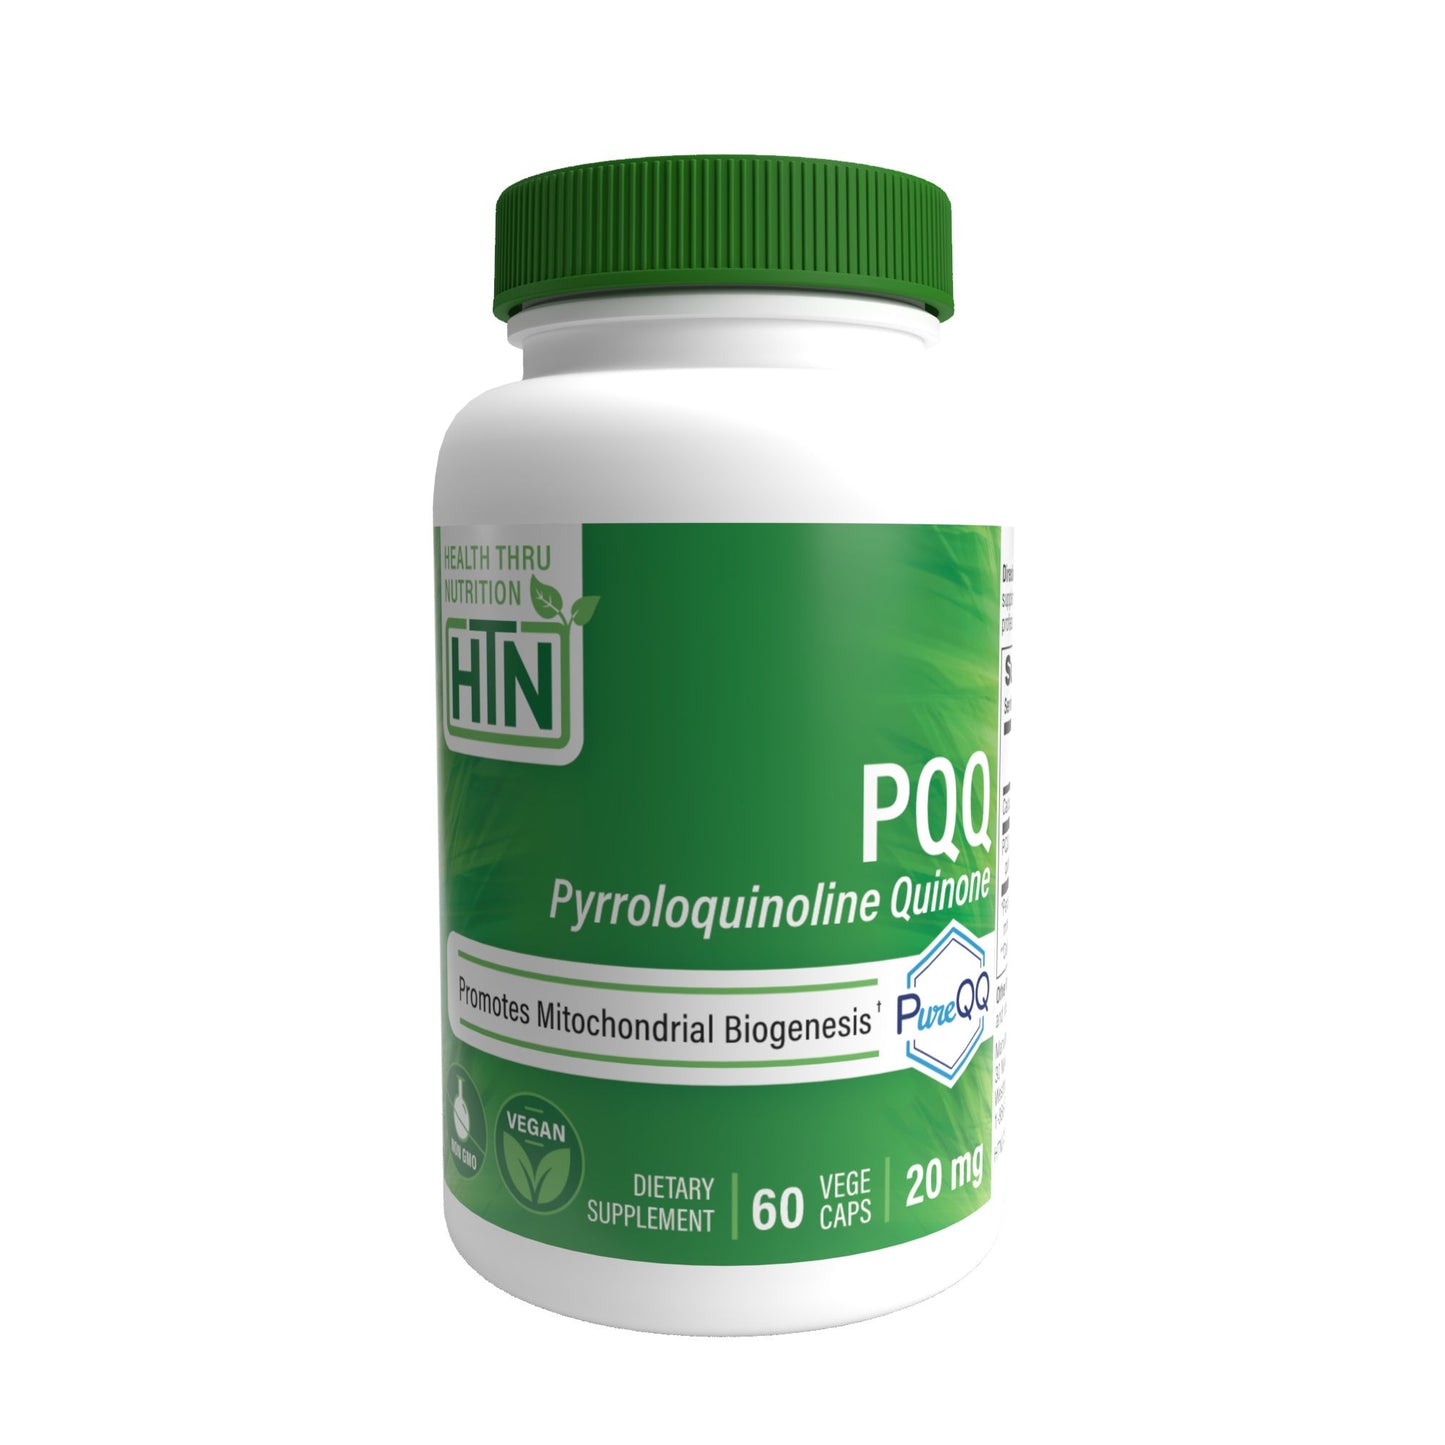 Health Thru Nutrition PQQ Pyrroloquinoline Quinone (as PureQQ™) 20mg (NON-GMO) 60 Vegecaps Promotes Mitochondrial Biogenesis